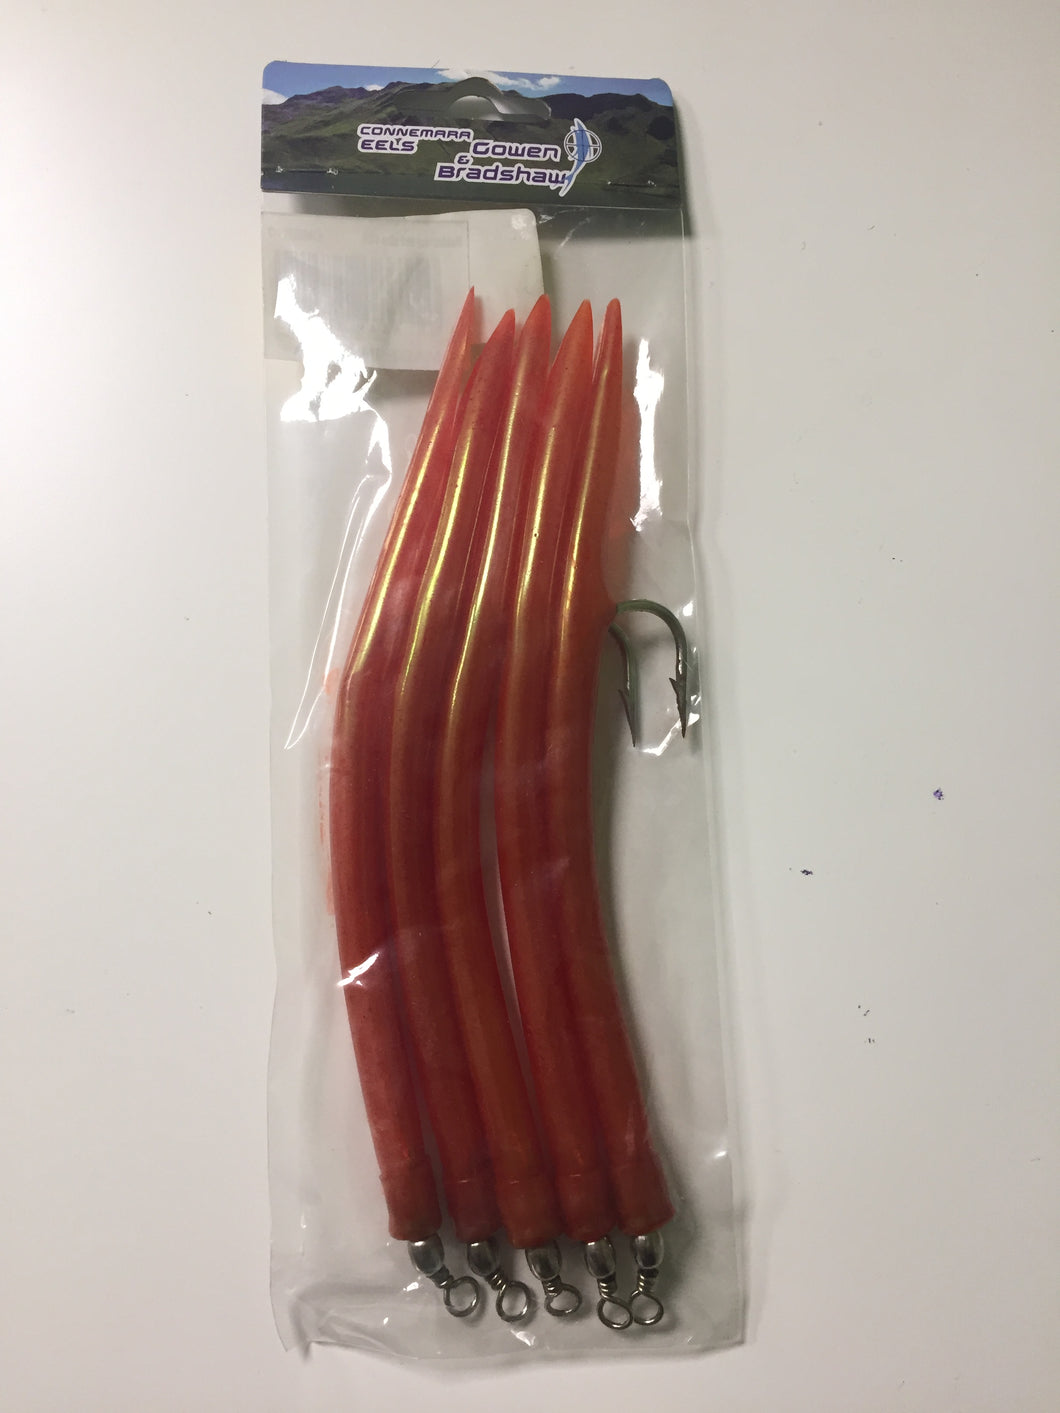 Gowen & Bradshaw Connemara Rubber Eels (Size 10/0)(Red)(5 Pack)